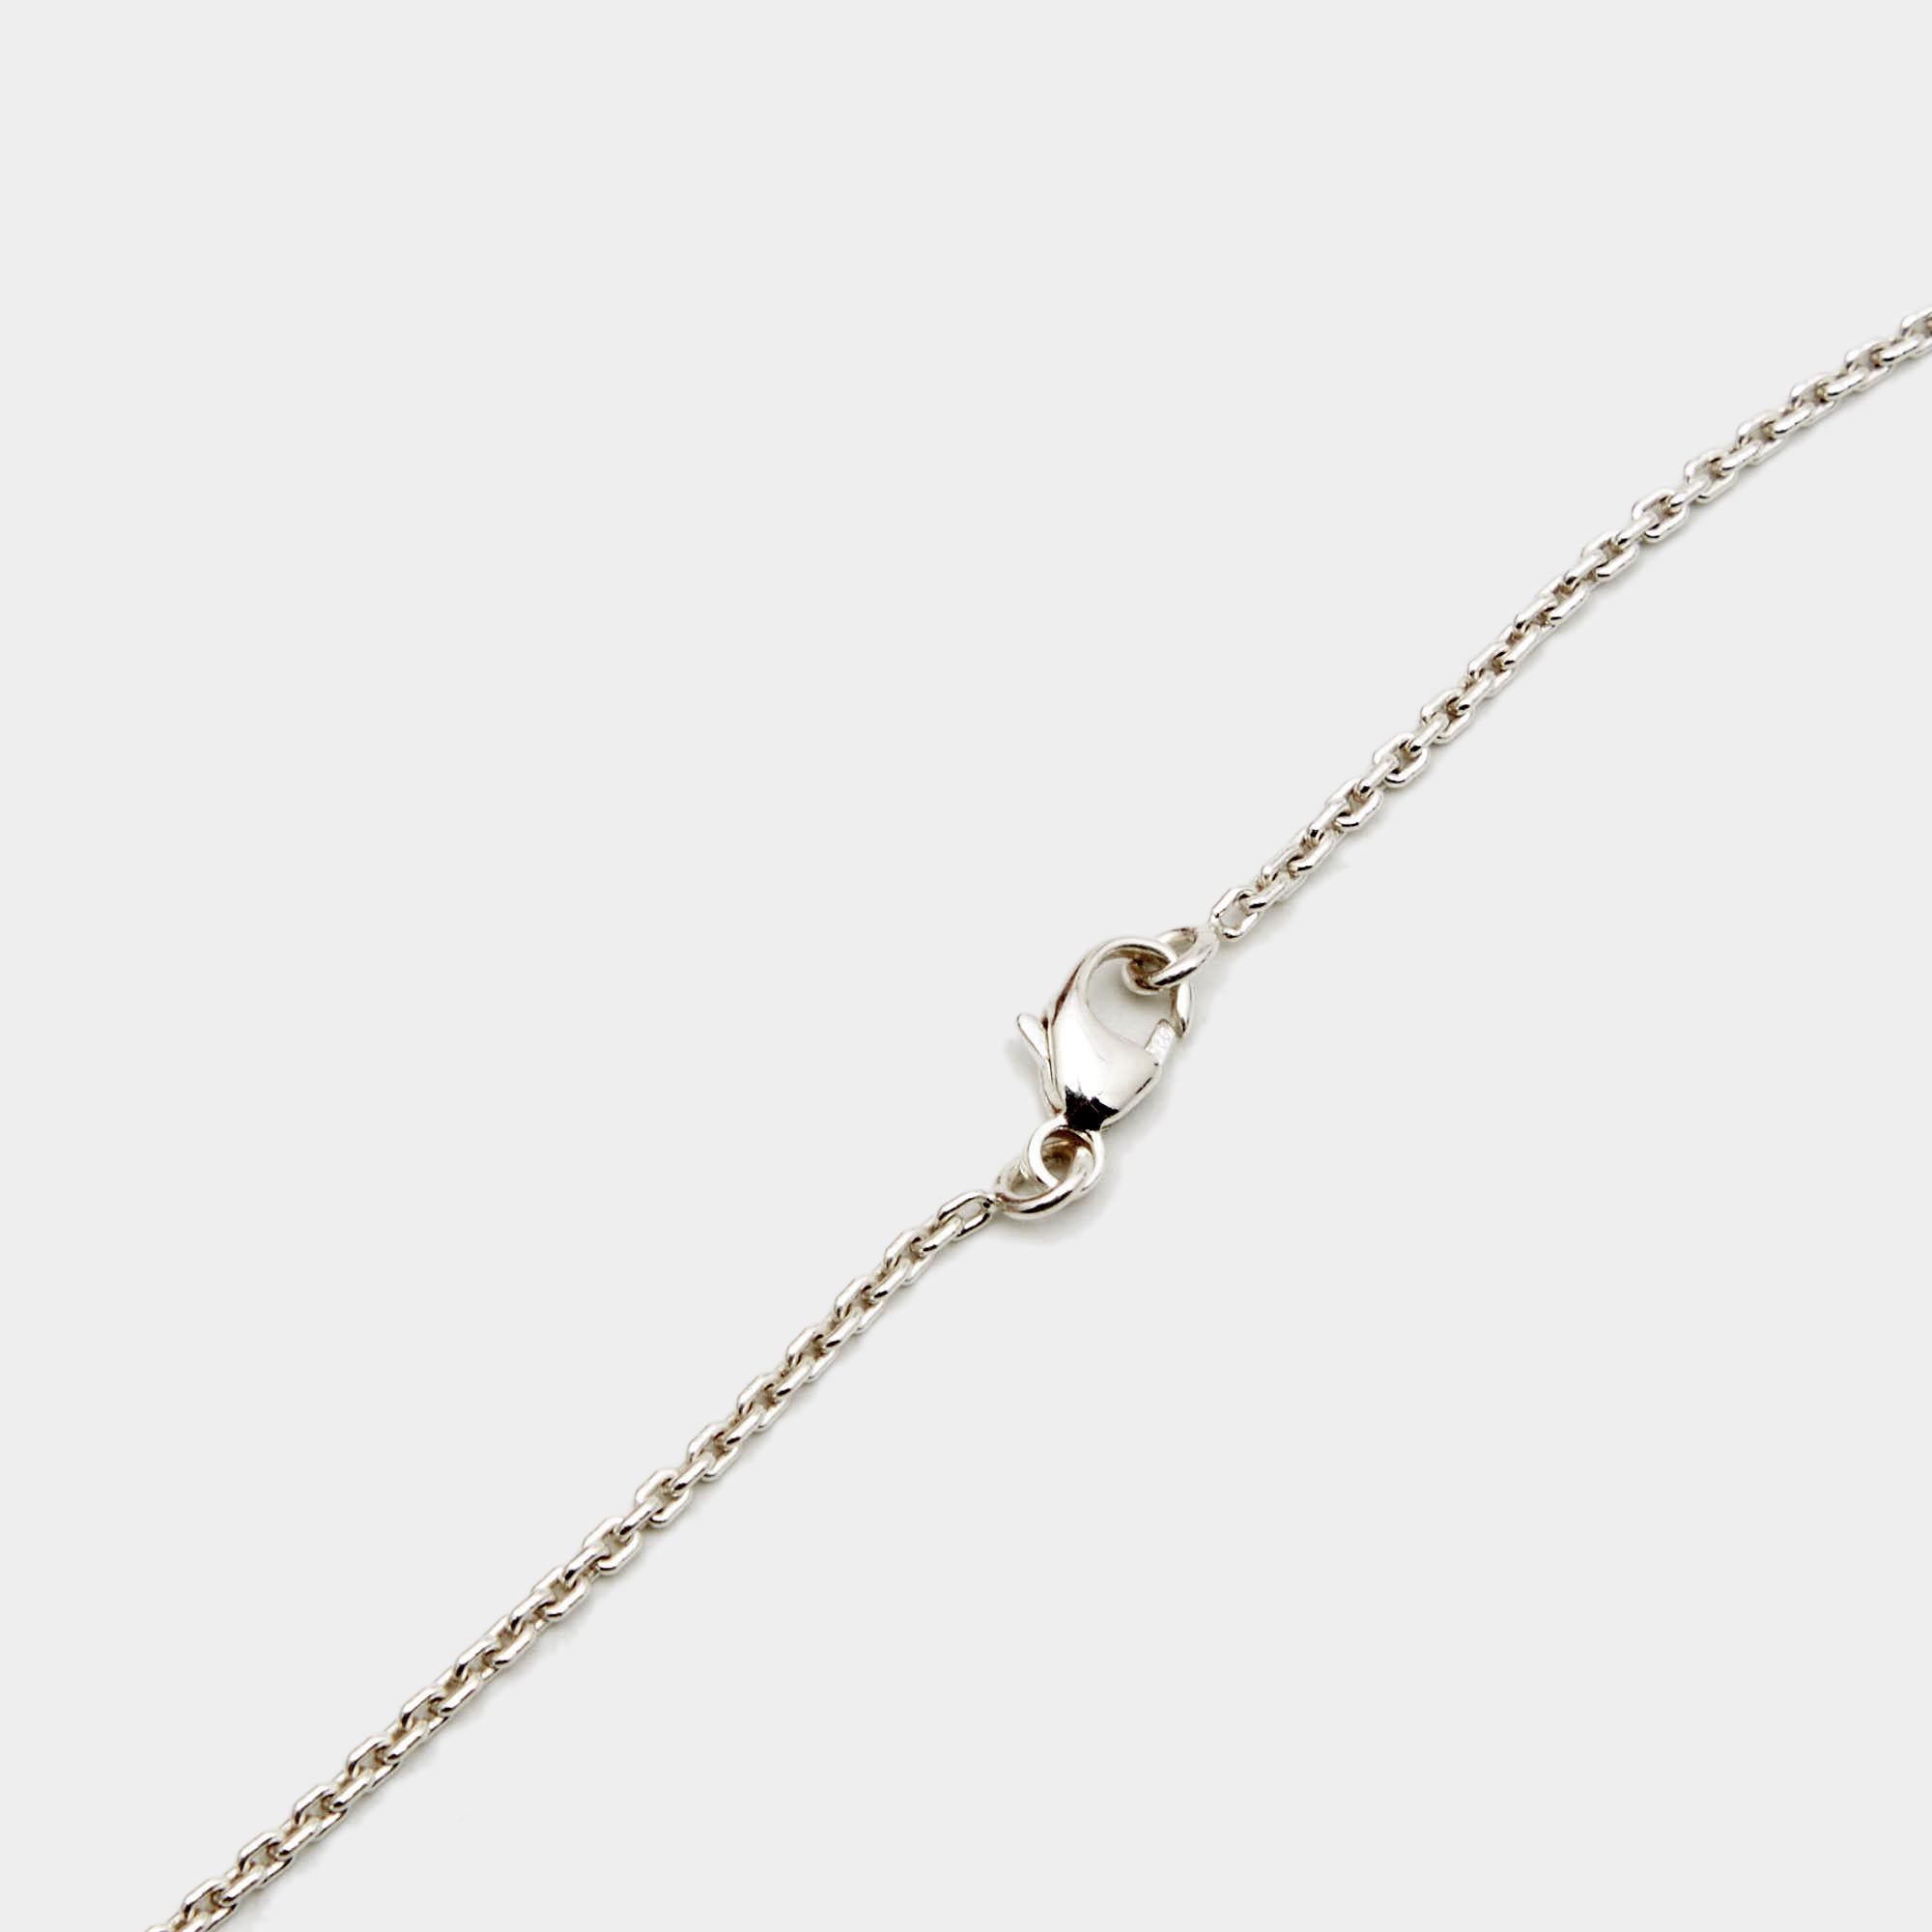 Contemporary Louis Vuitton Lockit Sterling Silver Pendant Necklace